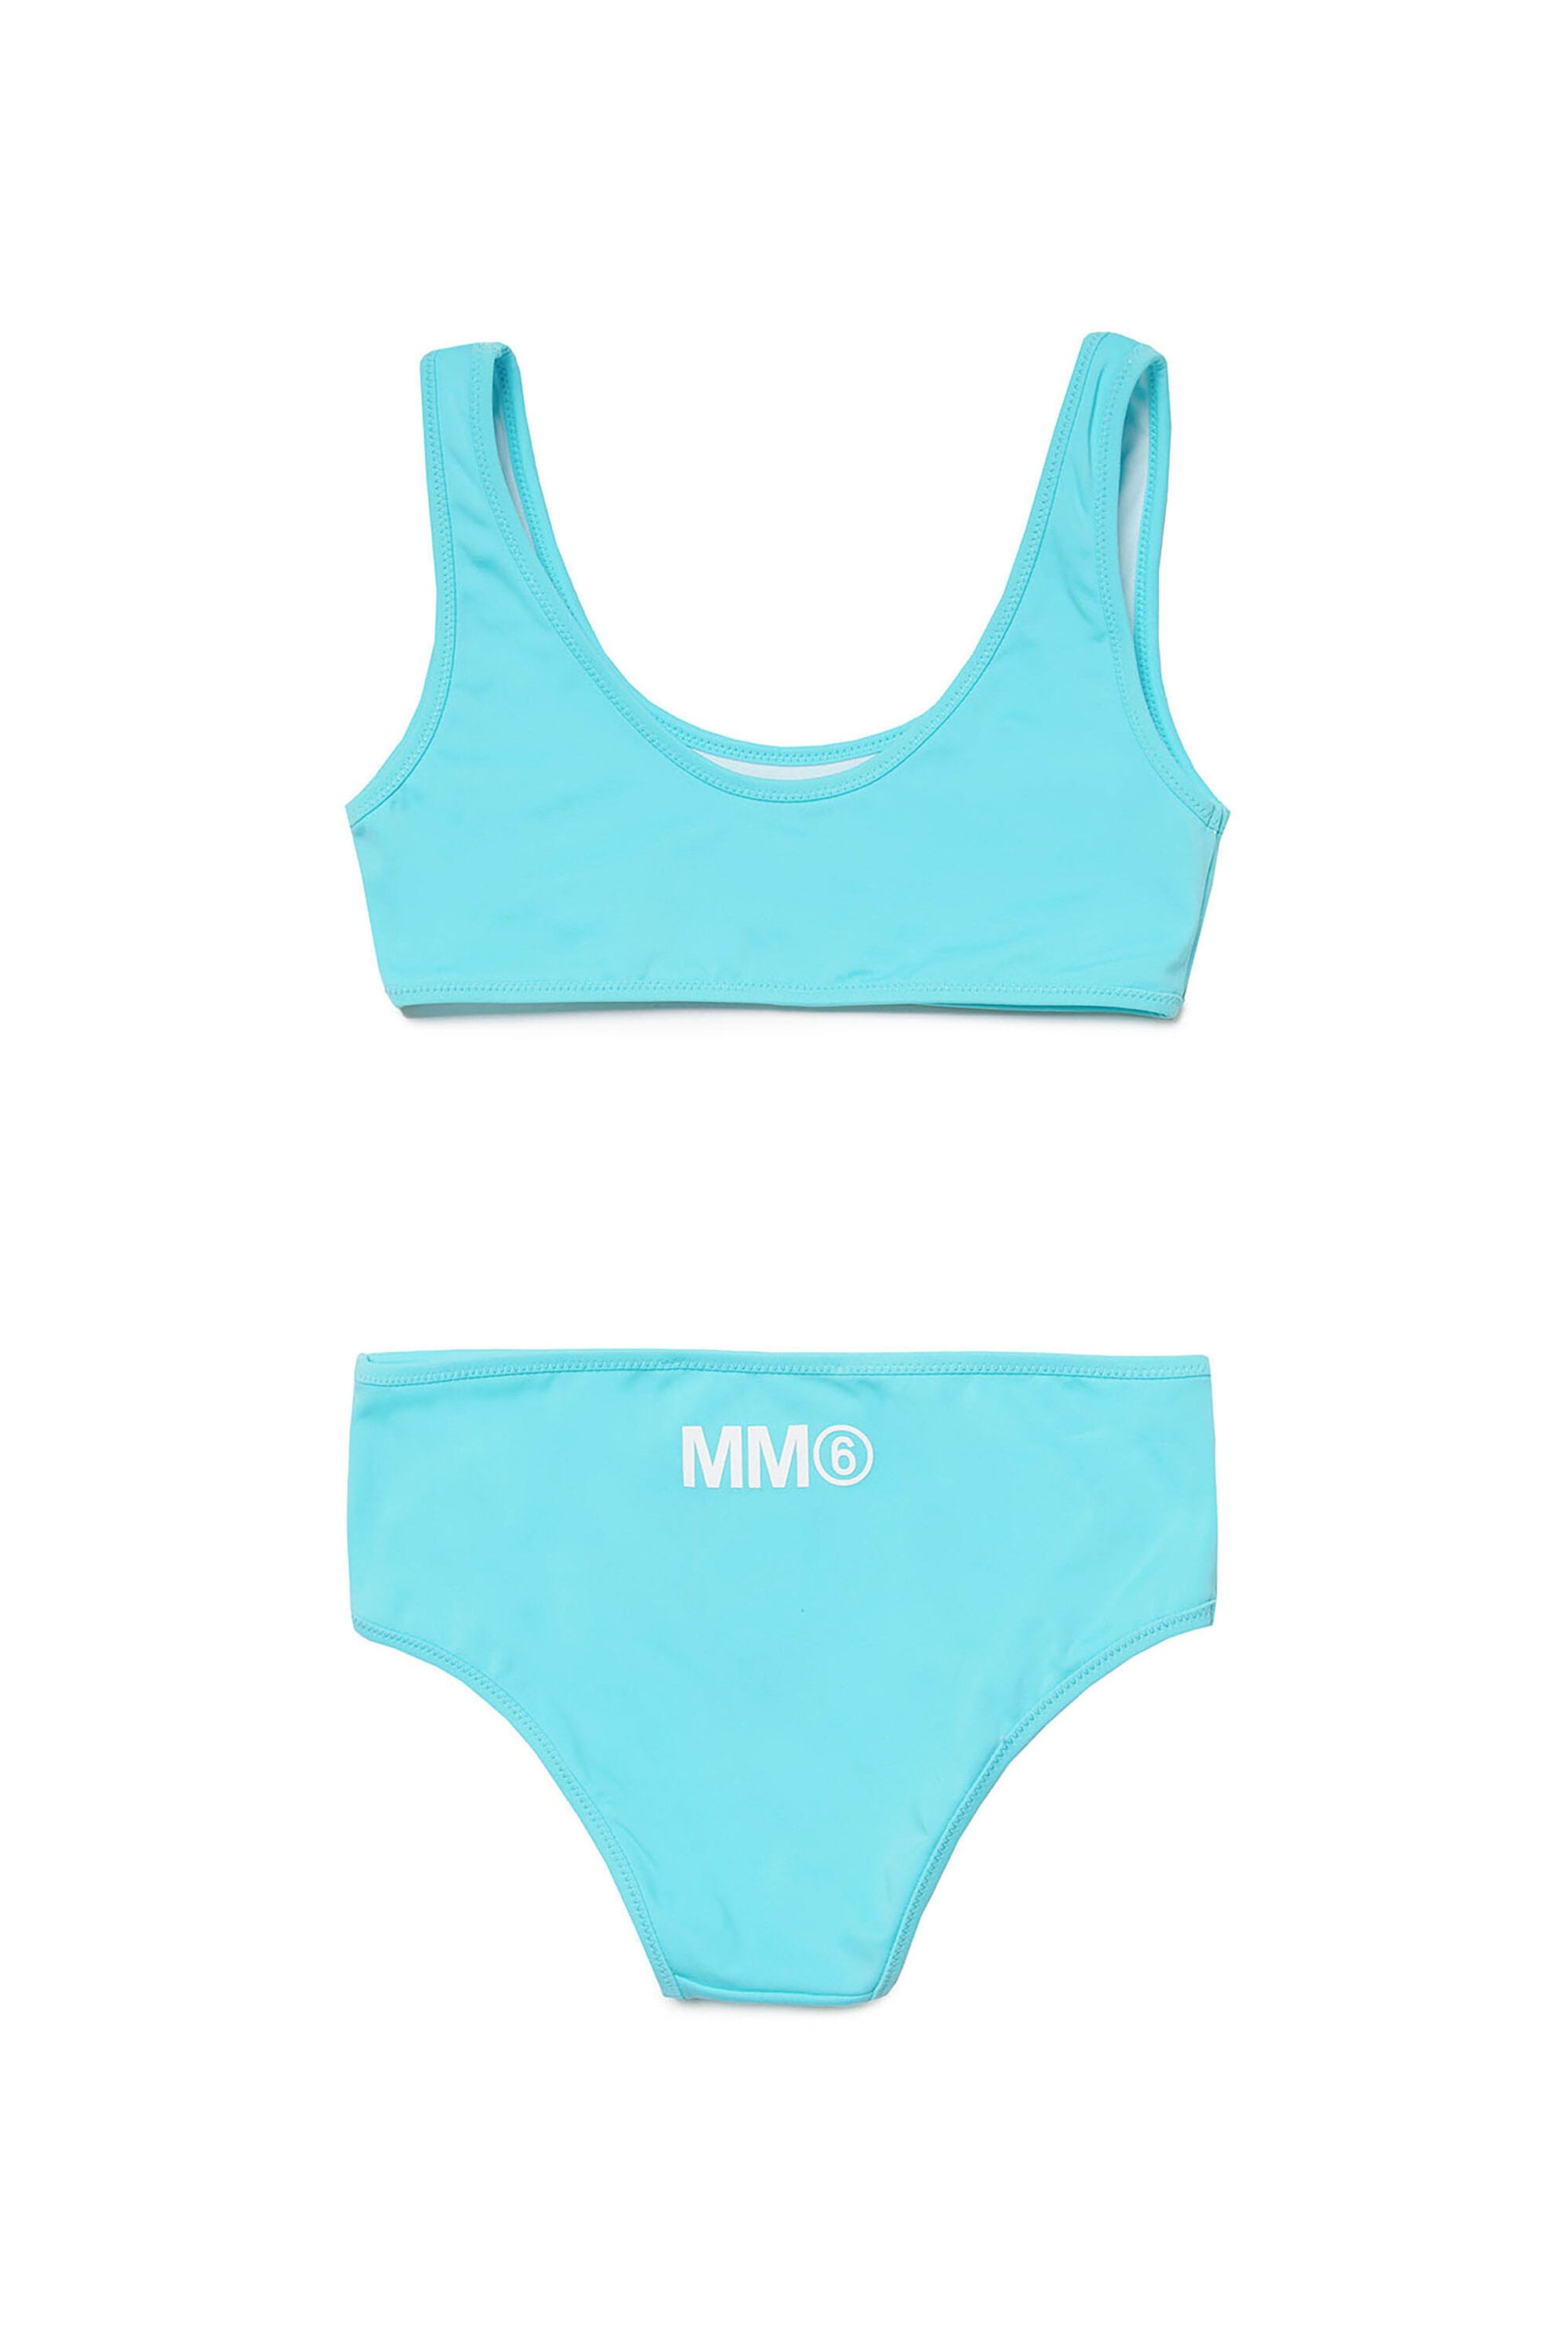 Lycra bikini swimsuit with MM6 logo